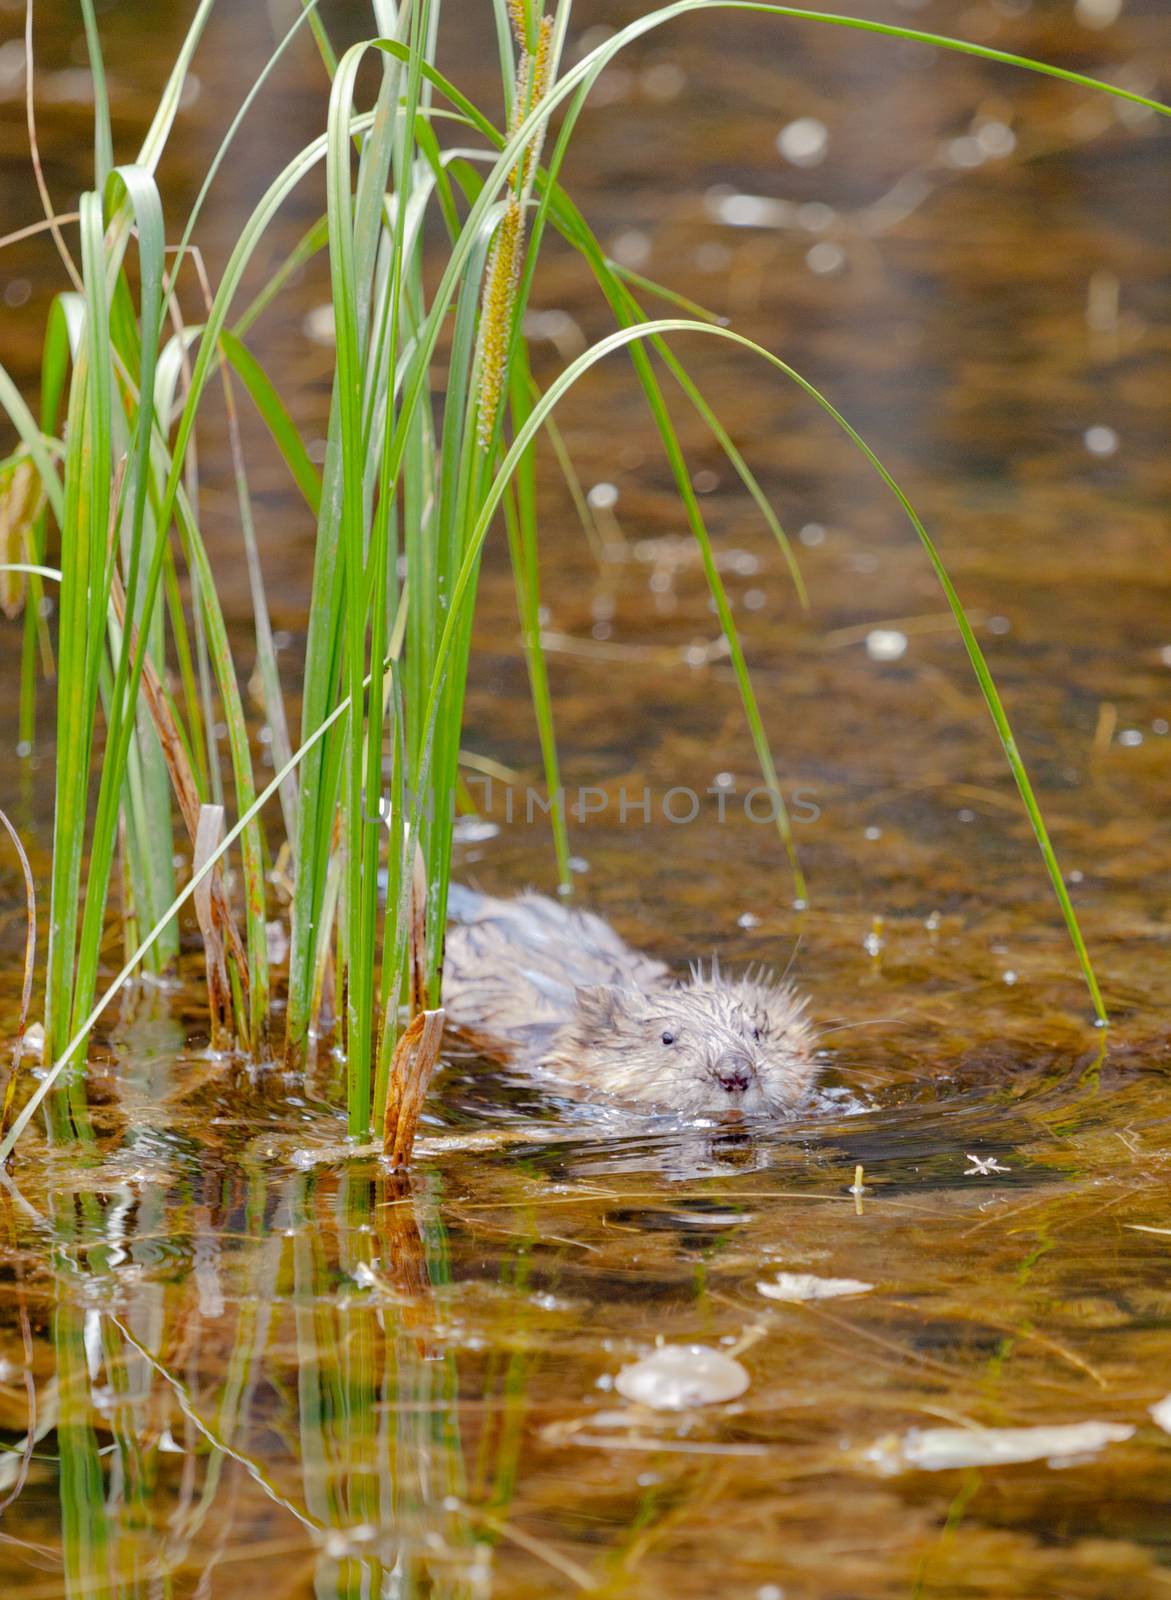 Semiaquatic rodent Muskrat, Ondatra zibethicus, swimming between sedges on surface of swampy pond